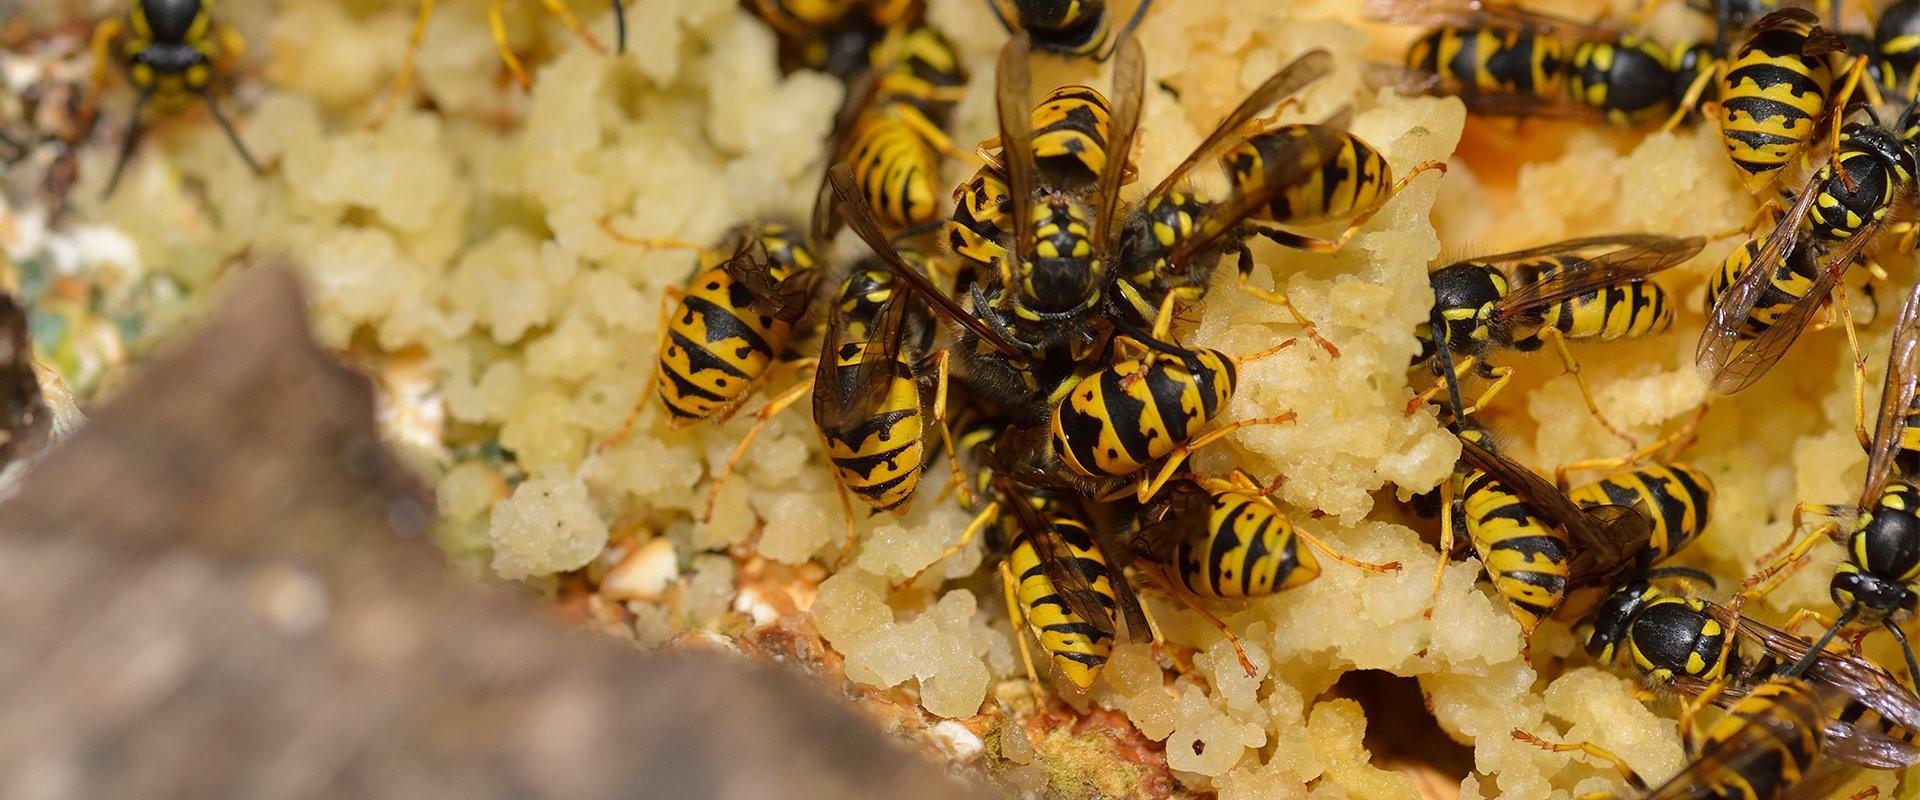 wasps eating food